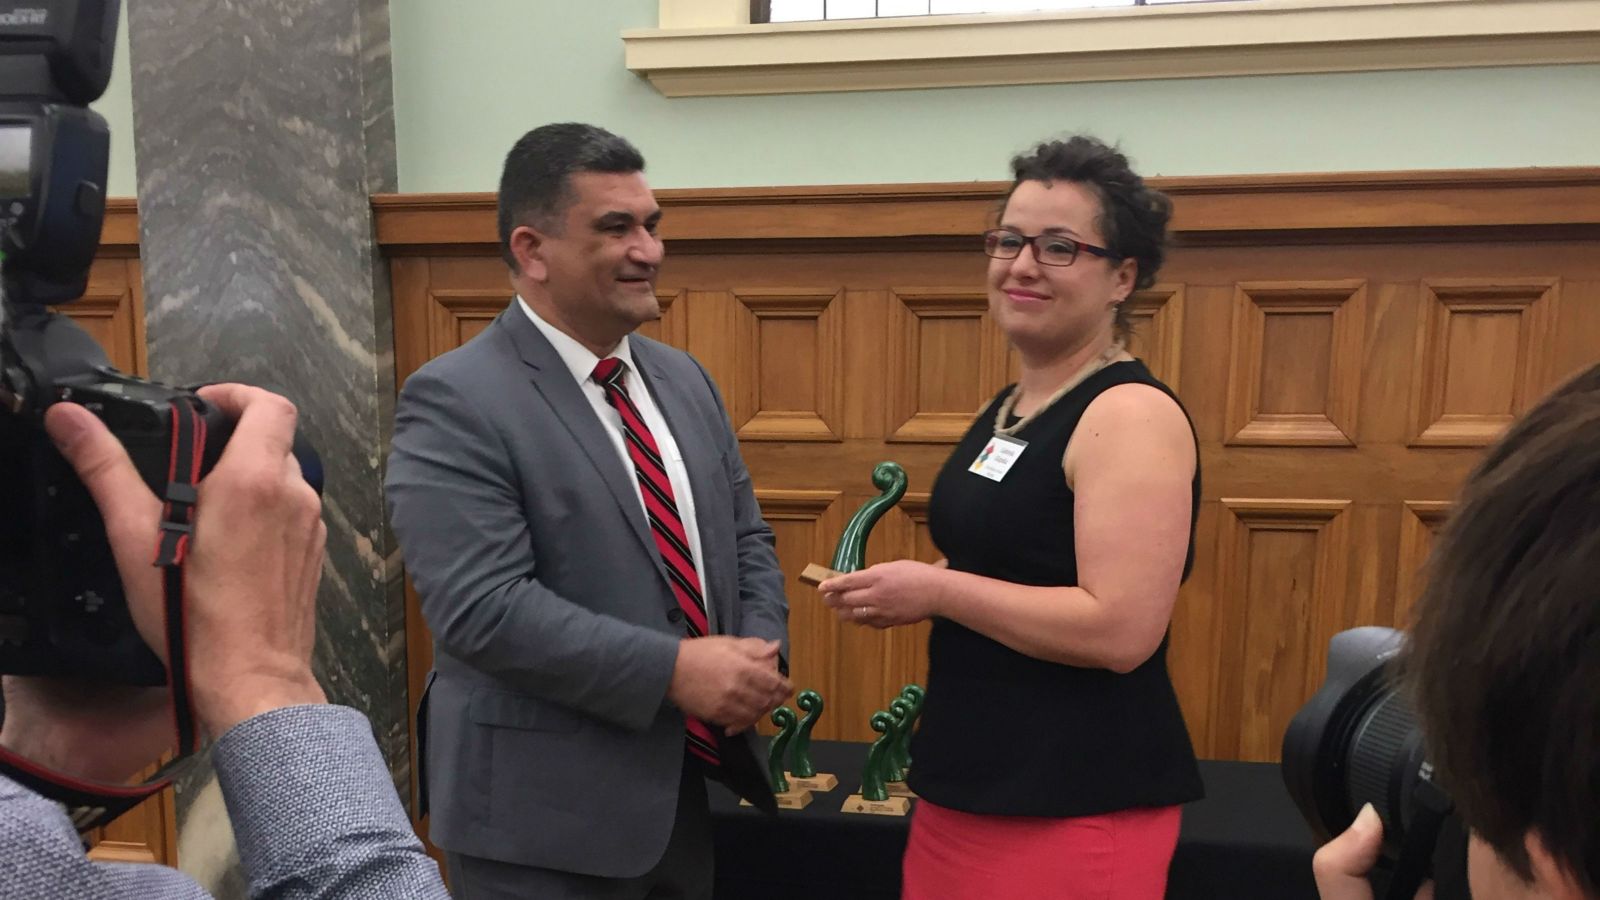 Gabriela Glapska receives her award from Hon Paul Eagle MP.